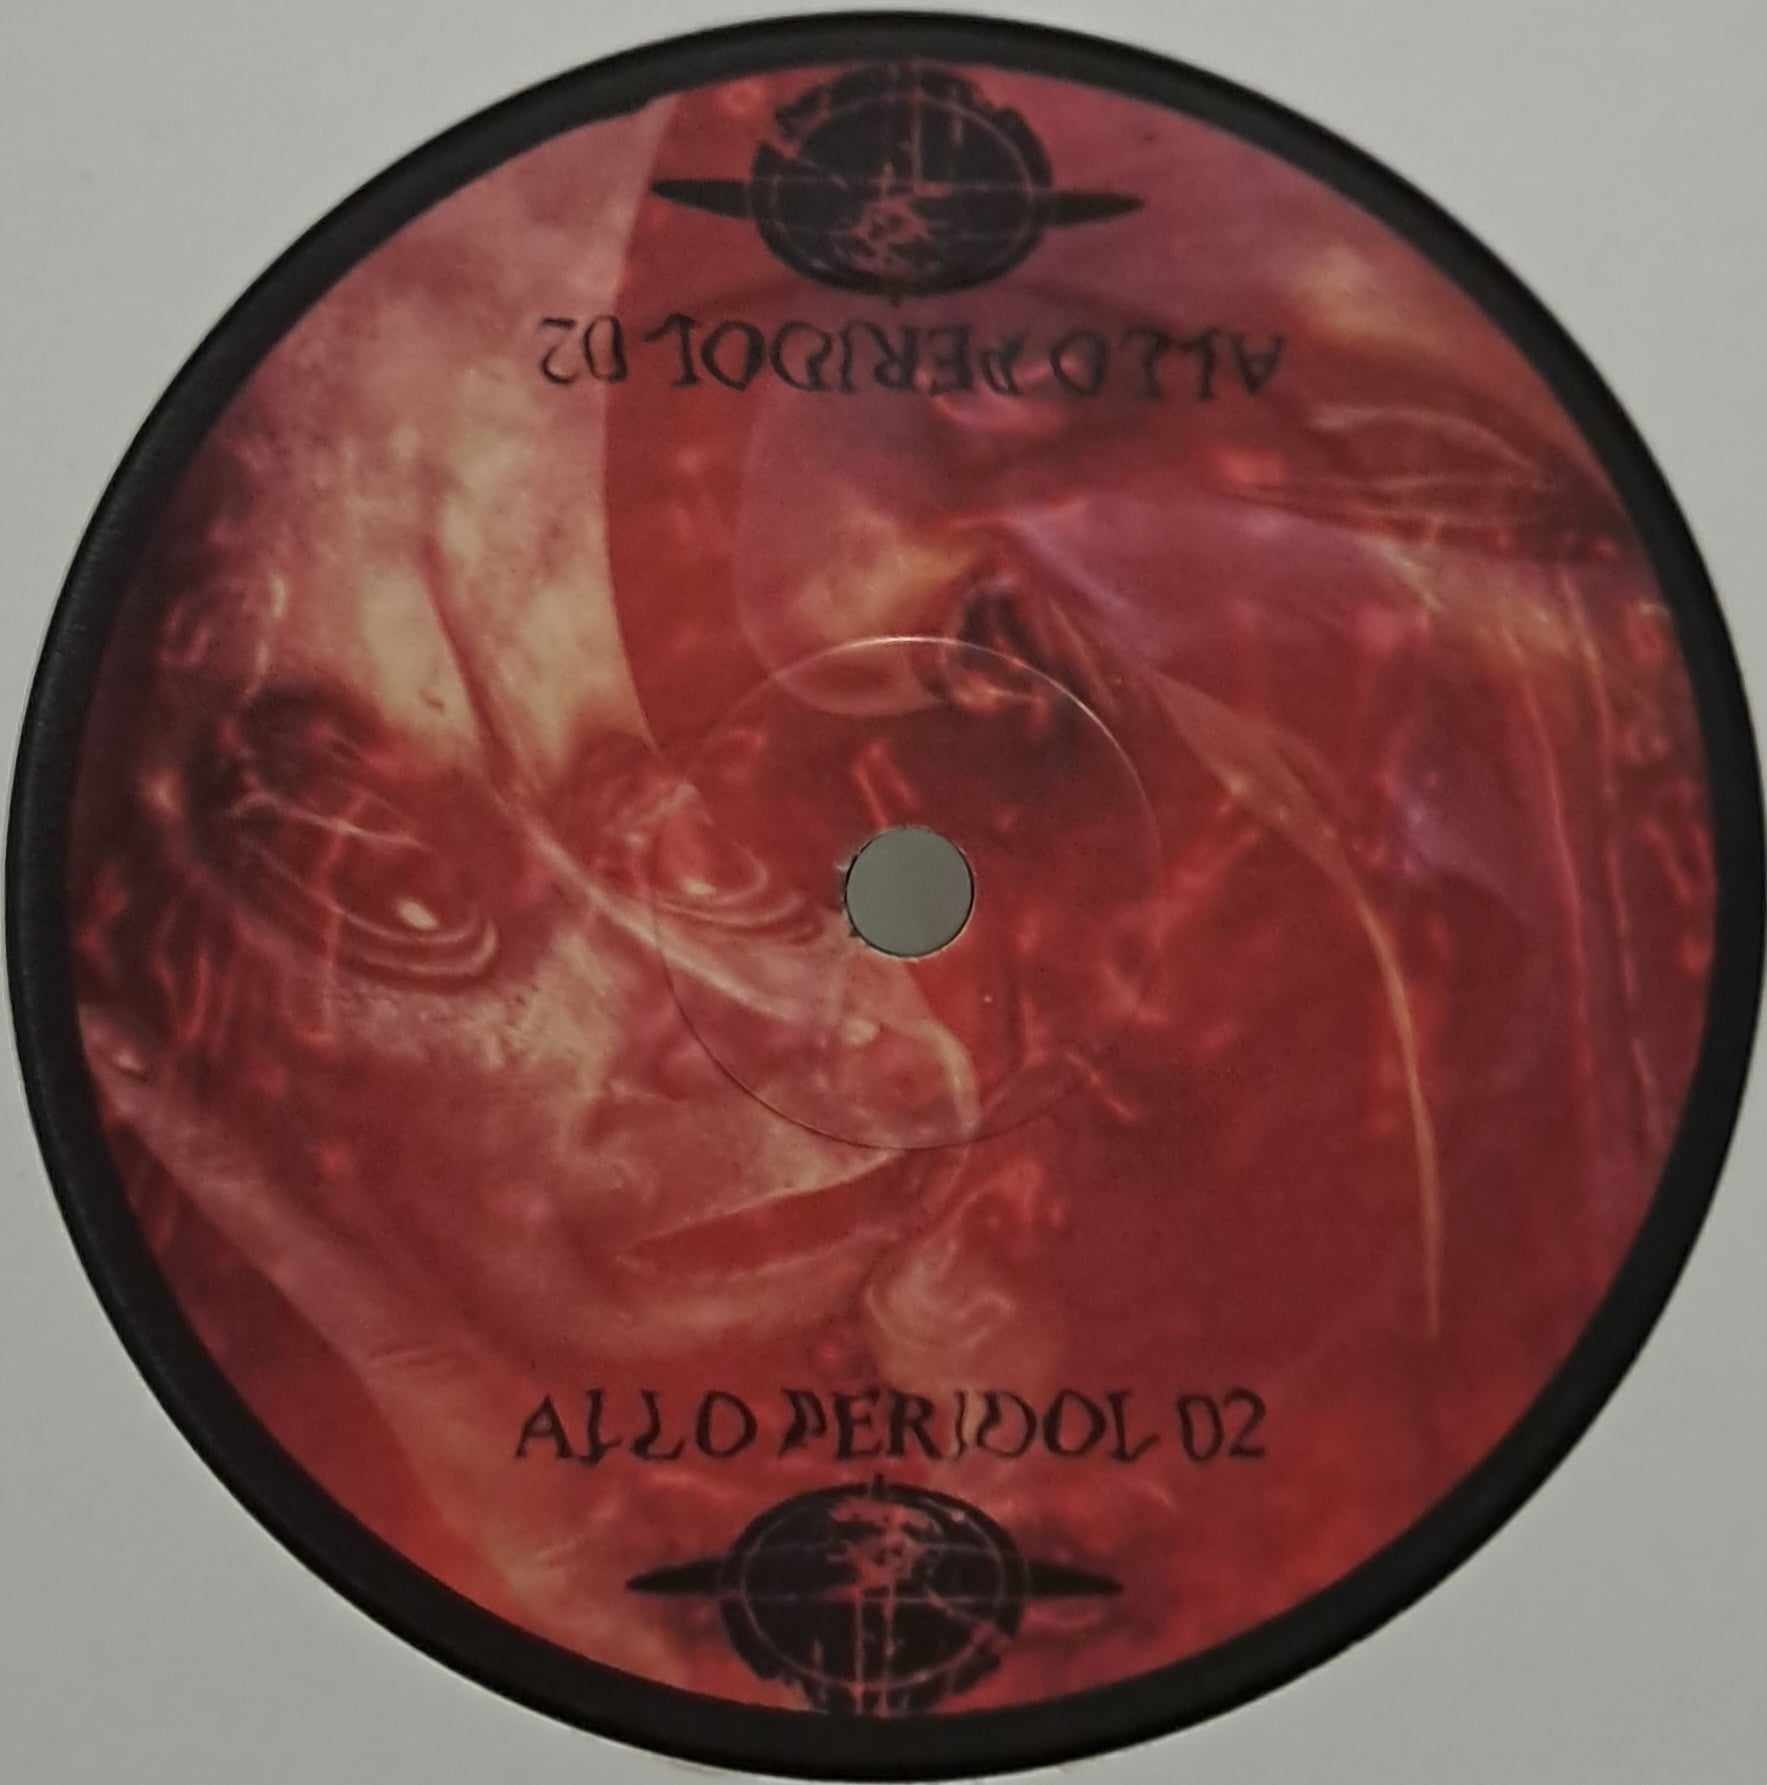 Alloperidol 02 - vinyle hardcore